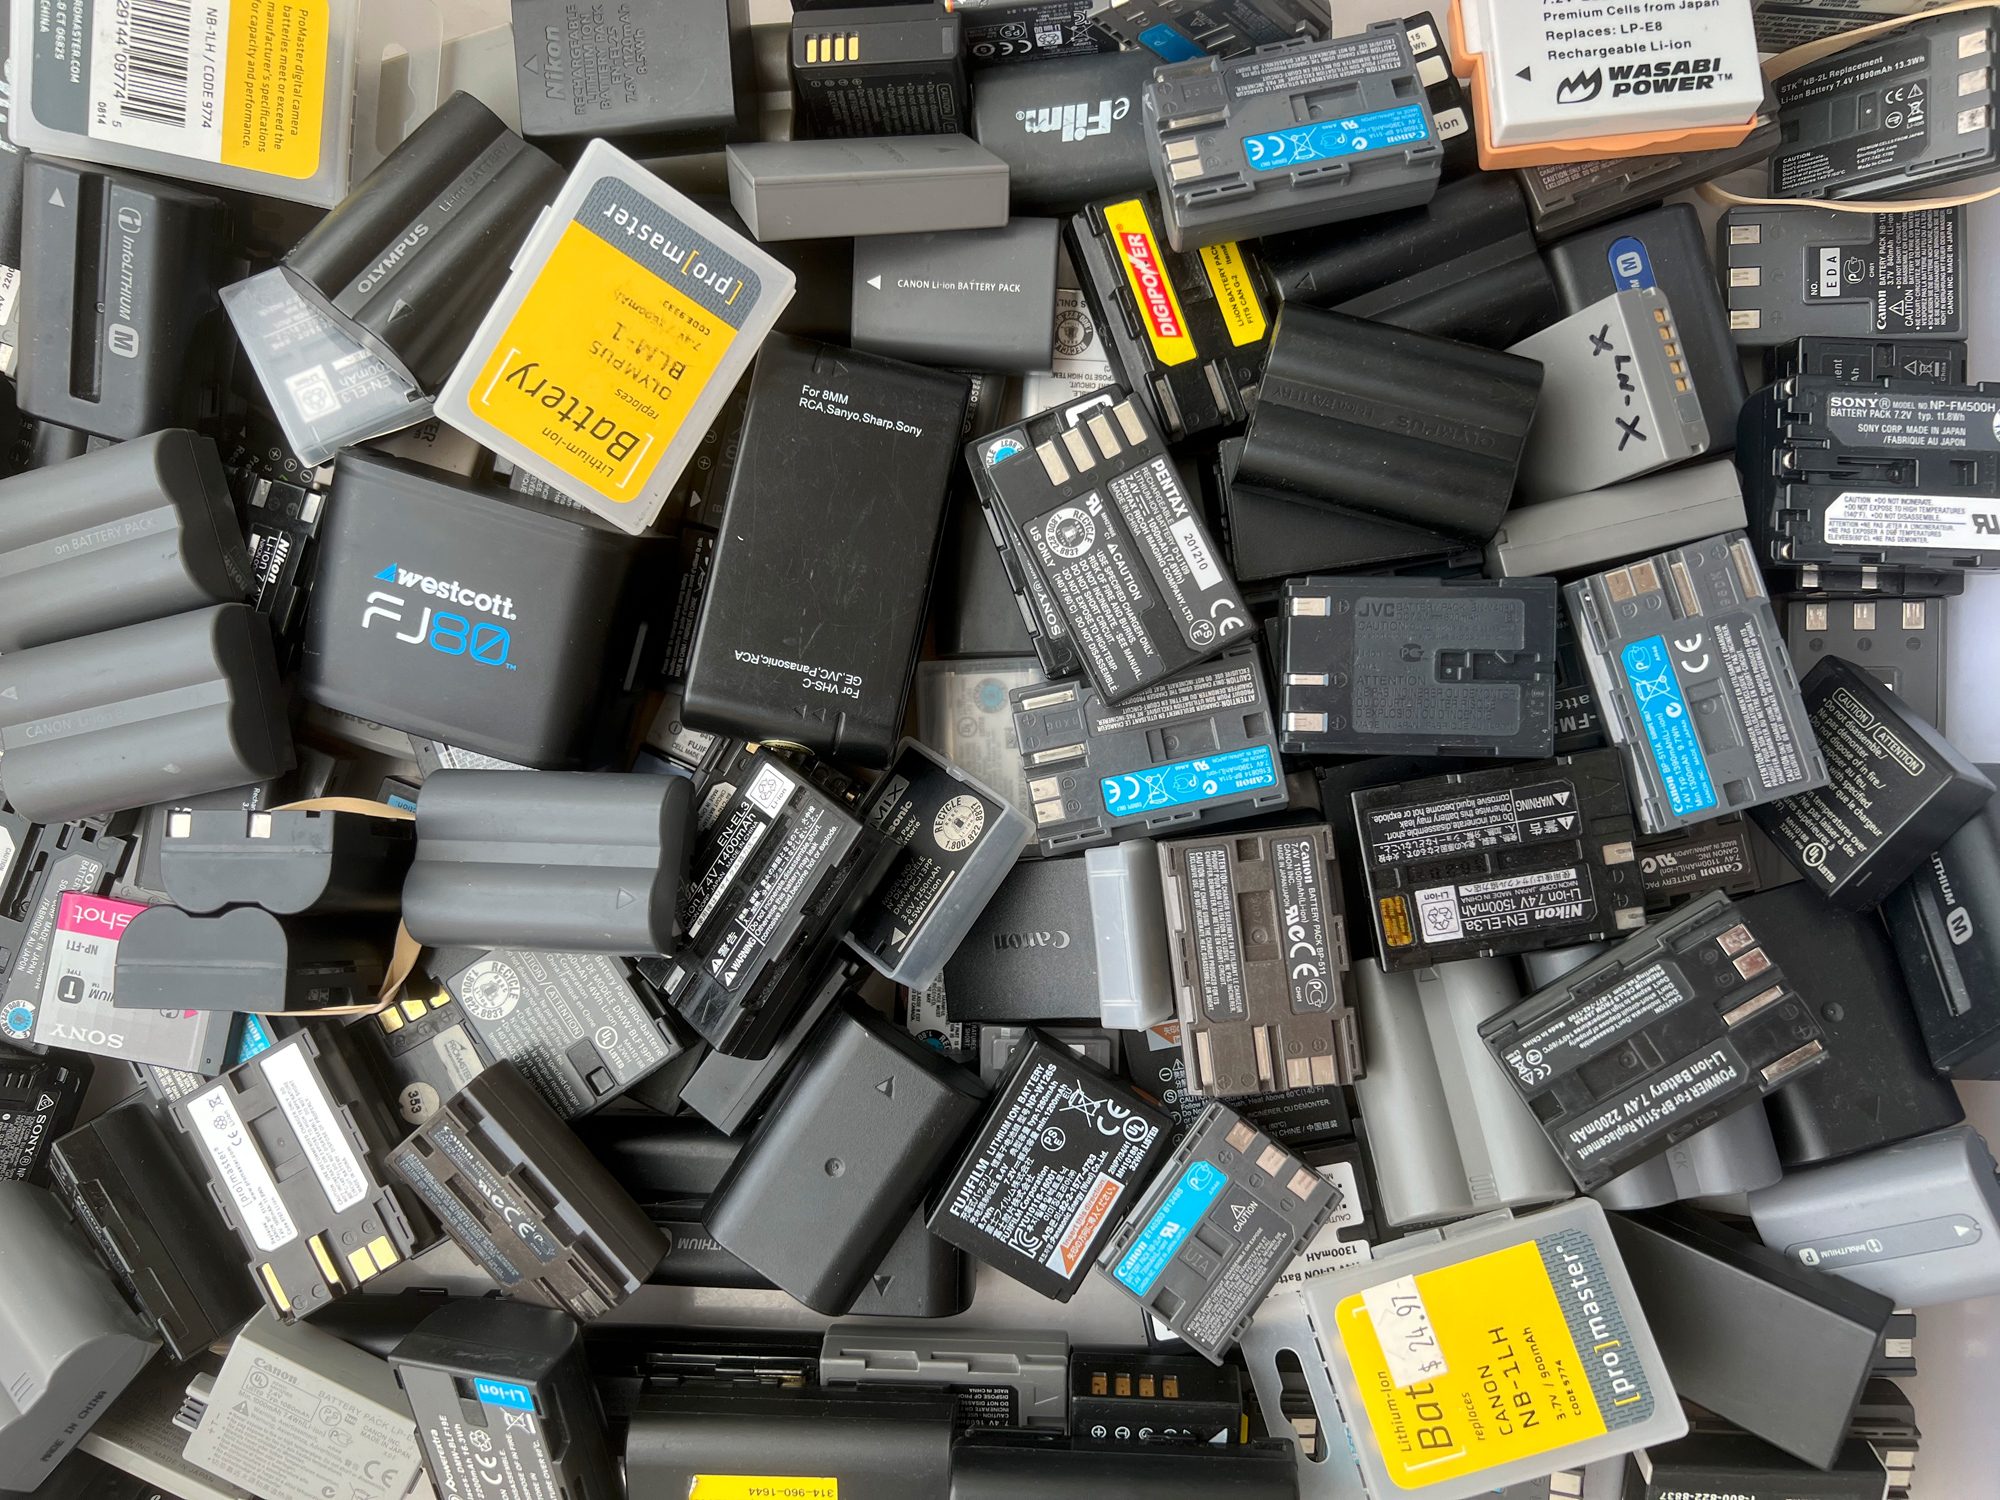 So many batteries.